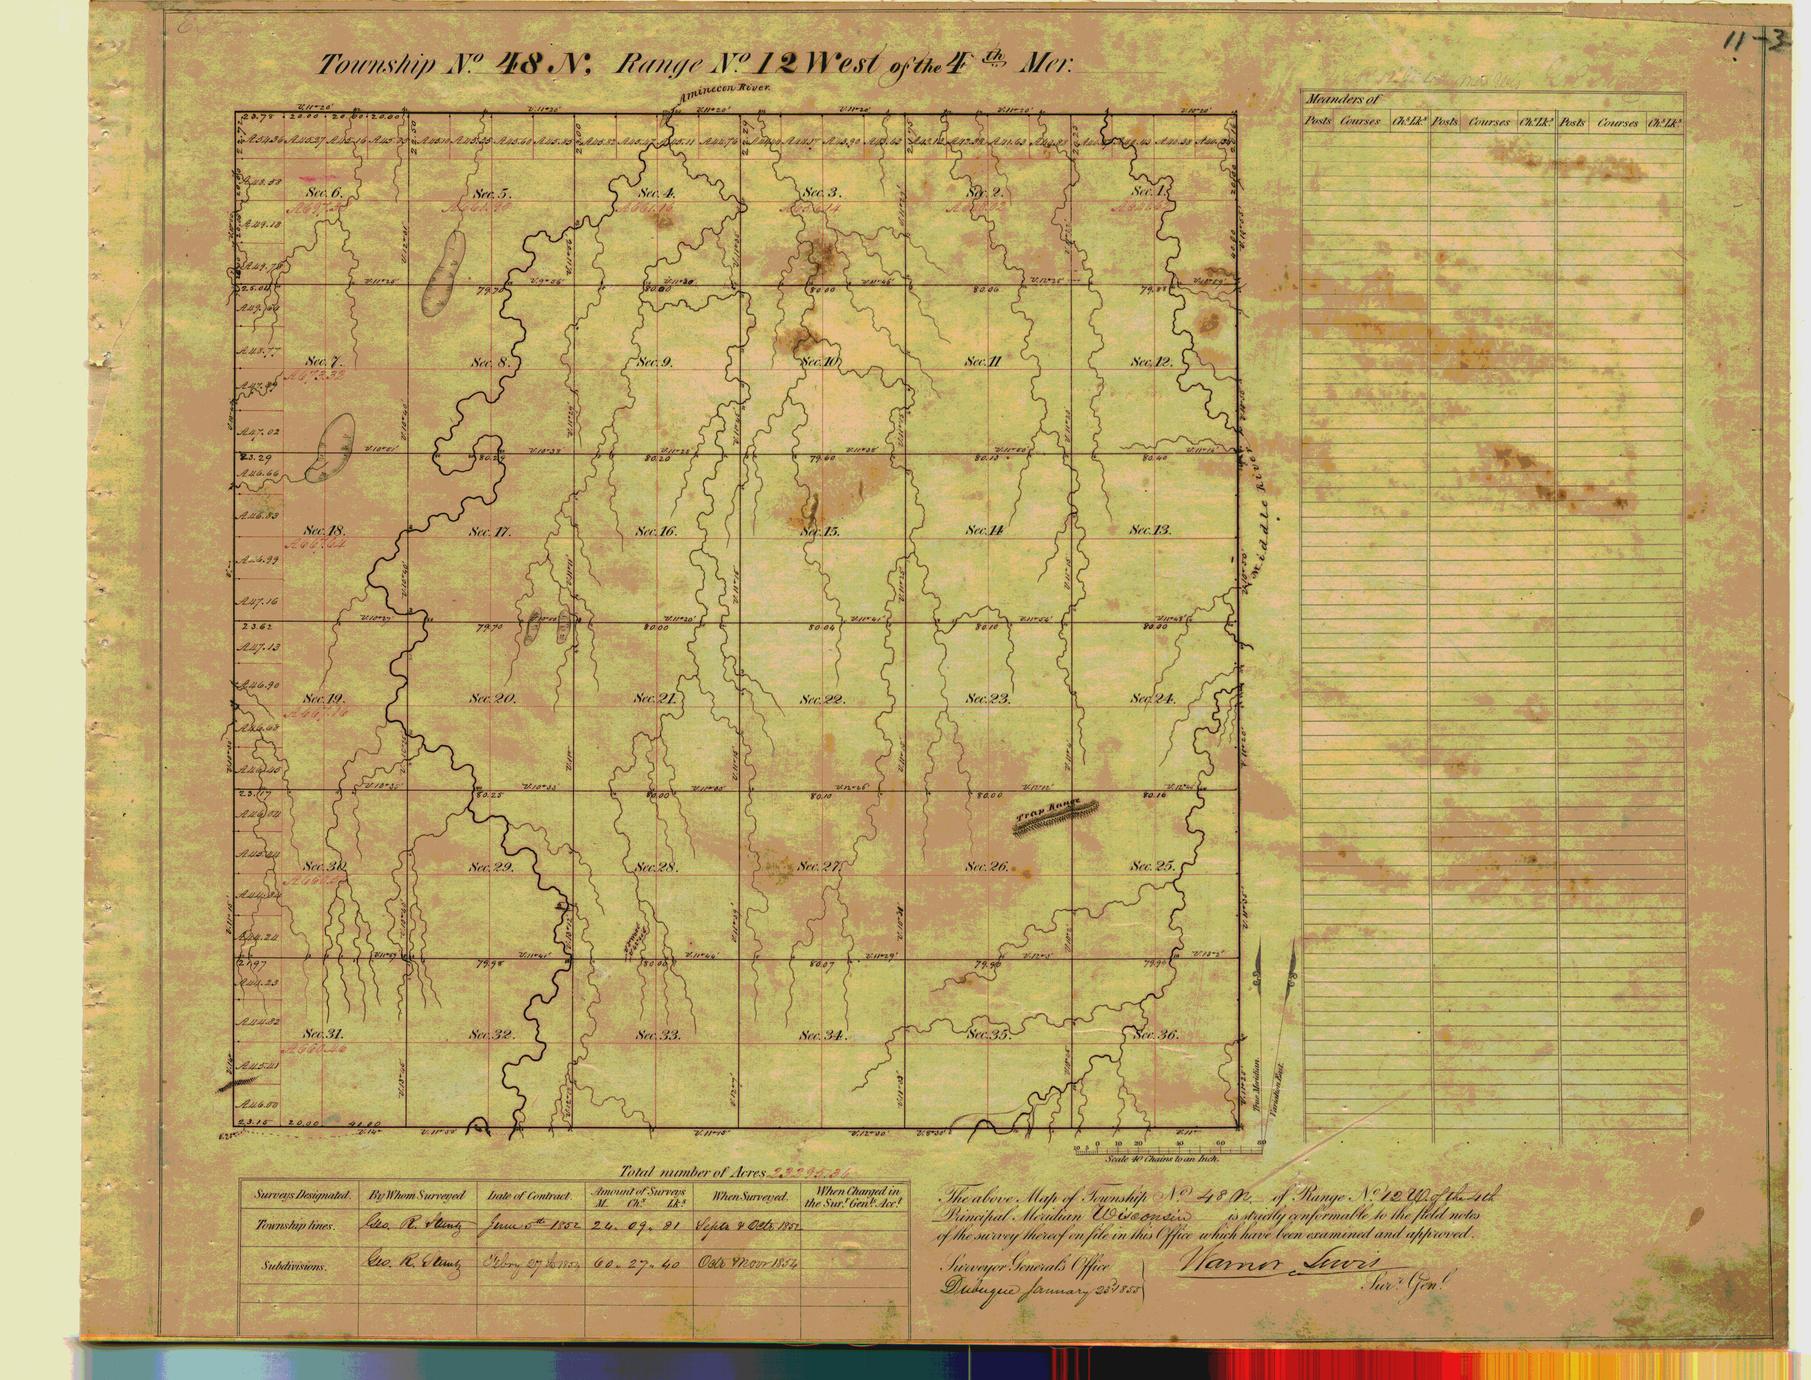 [Public Land Survey System map: Wisconsin Township 48 North, Range 12 West]